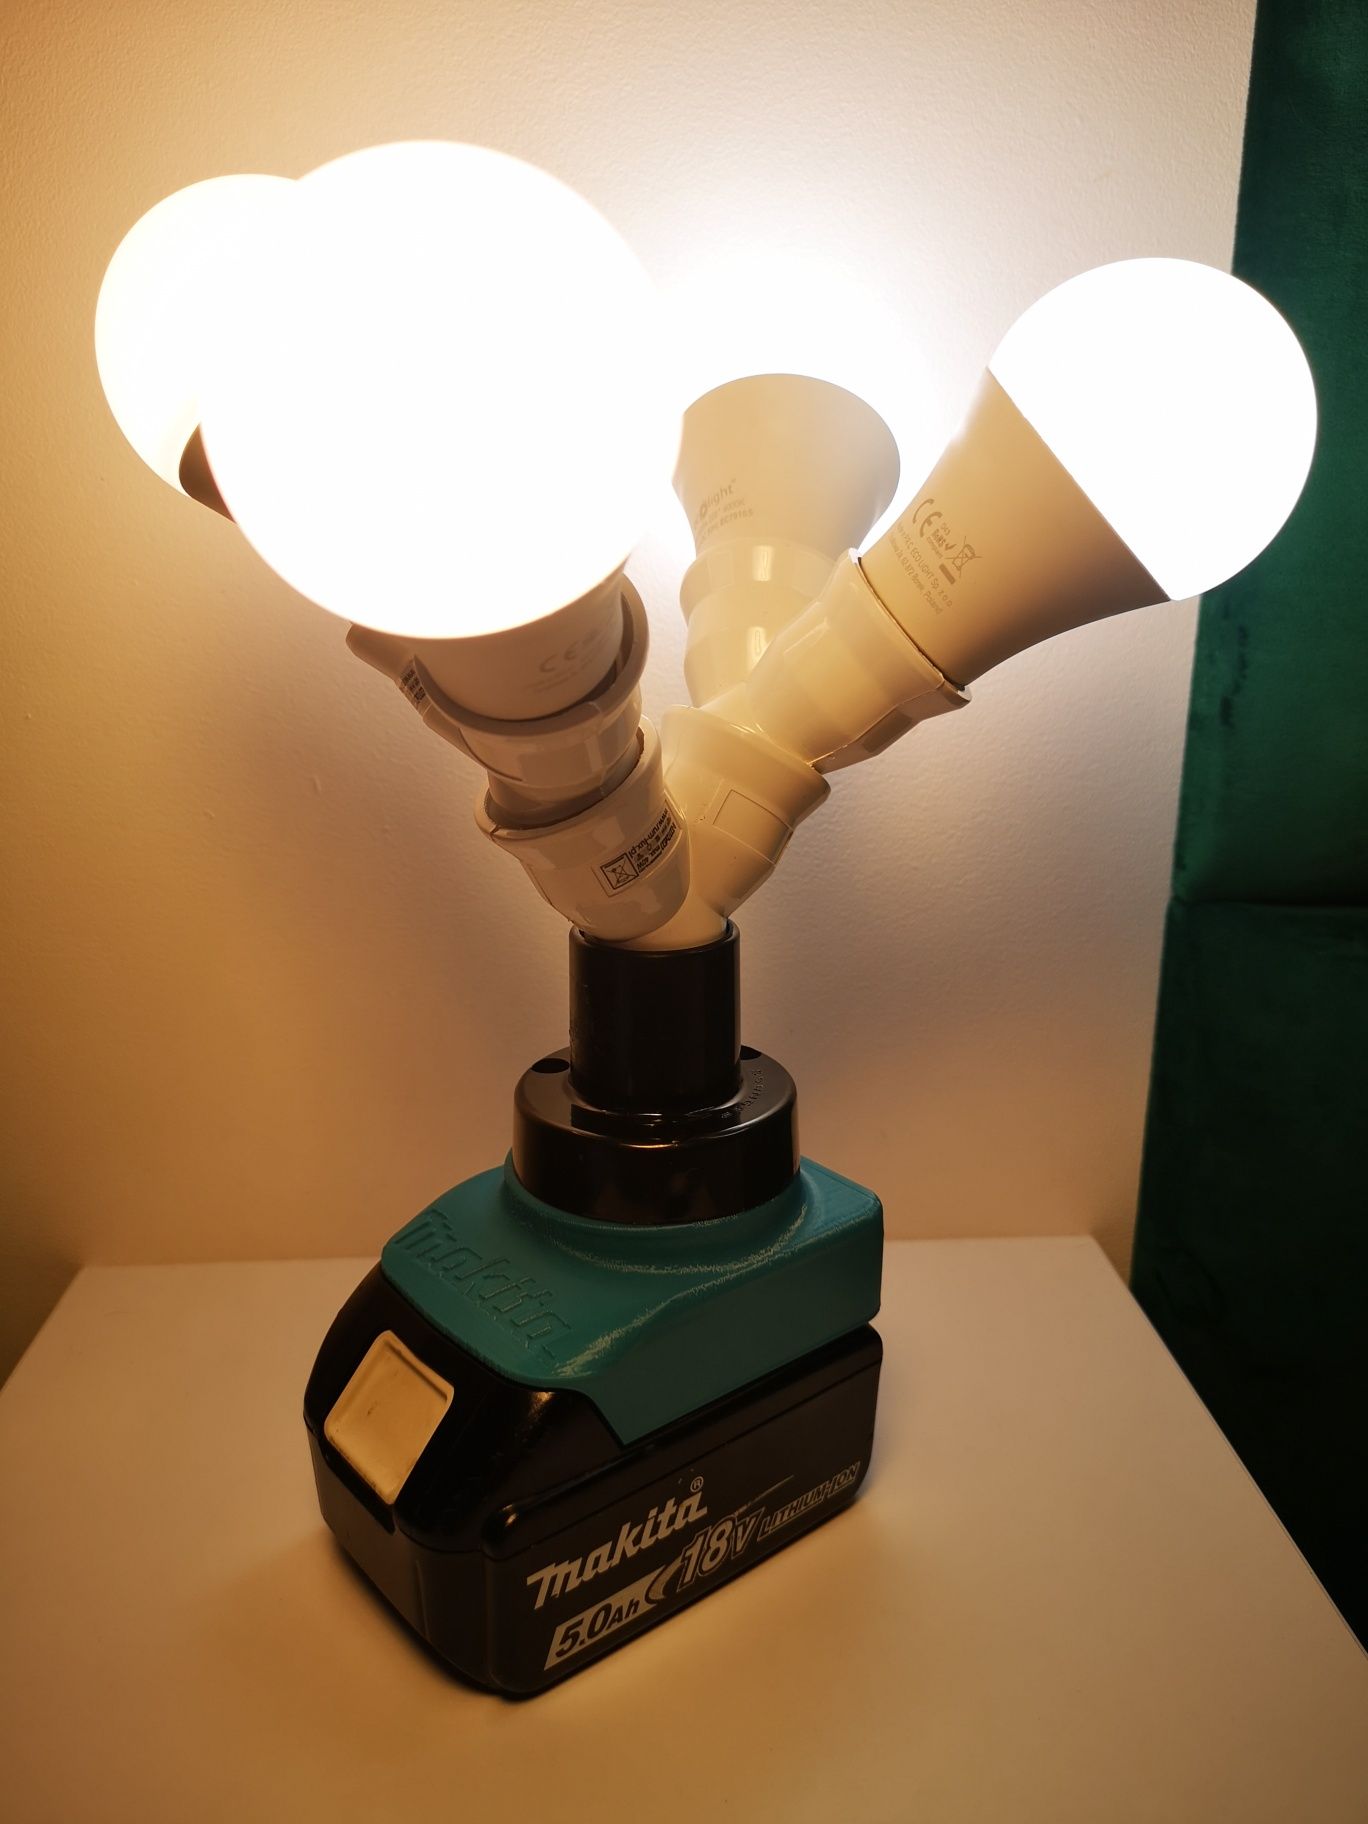 Makita 18v Lxt Lampa na żarówkę e27 z adapterem do akumulatorów